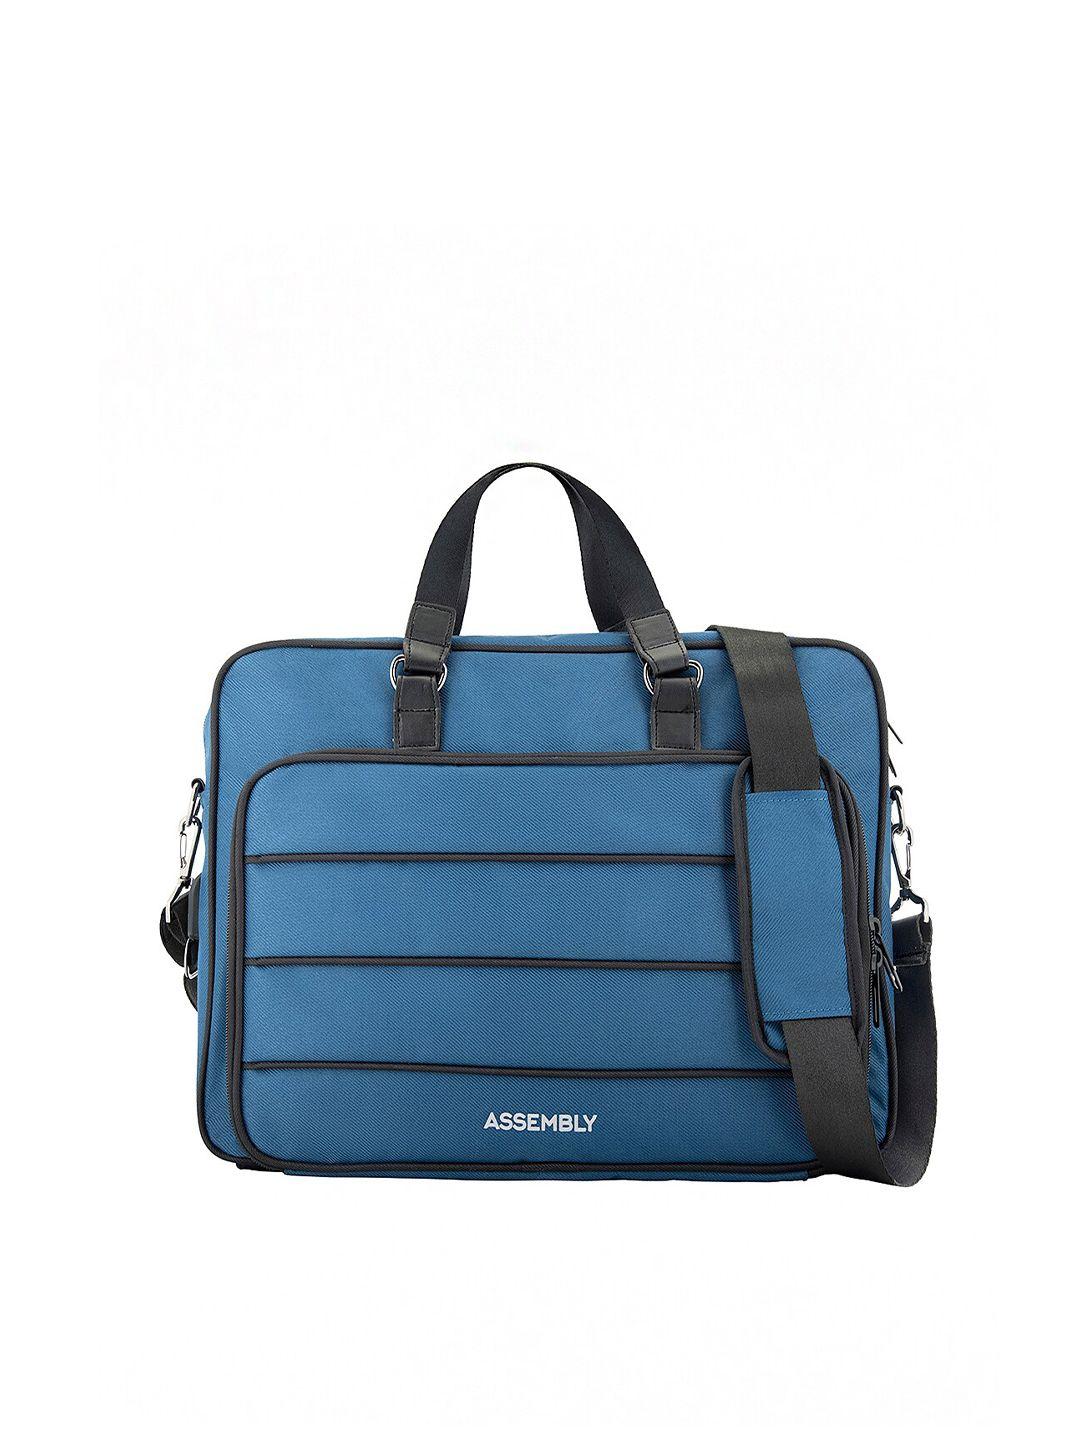 assembly unisex blue & black striped laptop bag